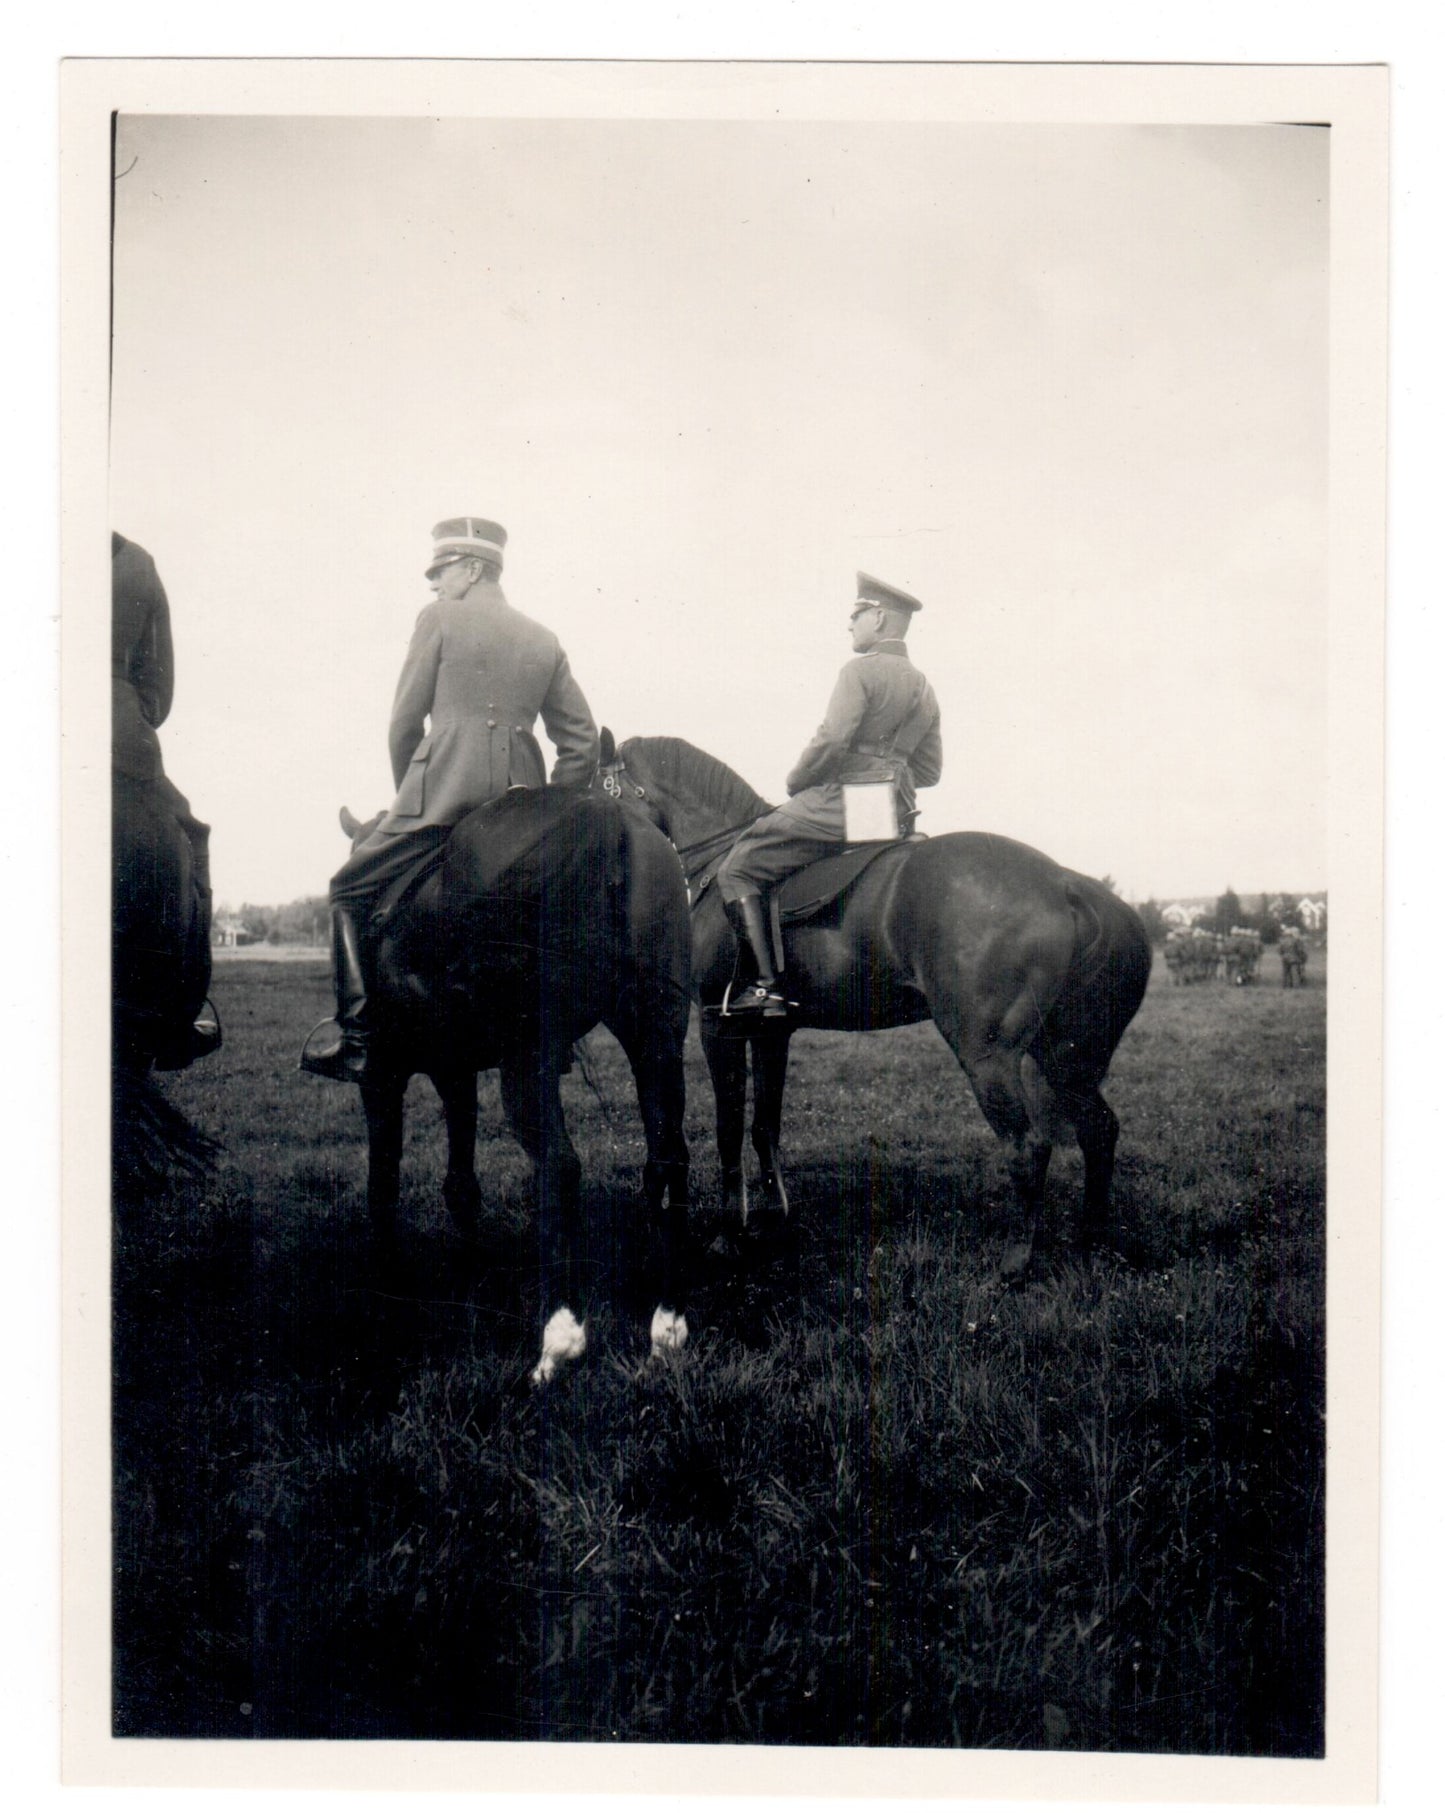 Vintage Photography - Equestrian Sports - Officers - Men on Horses - Sweden